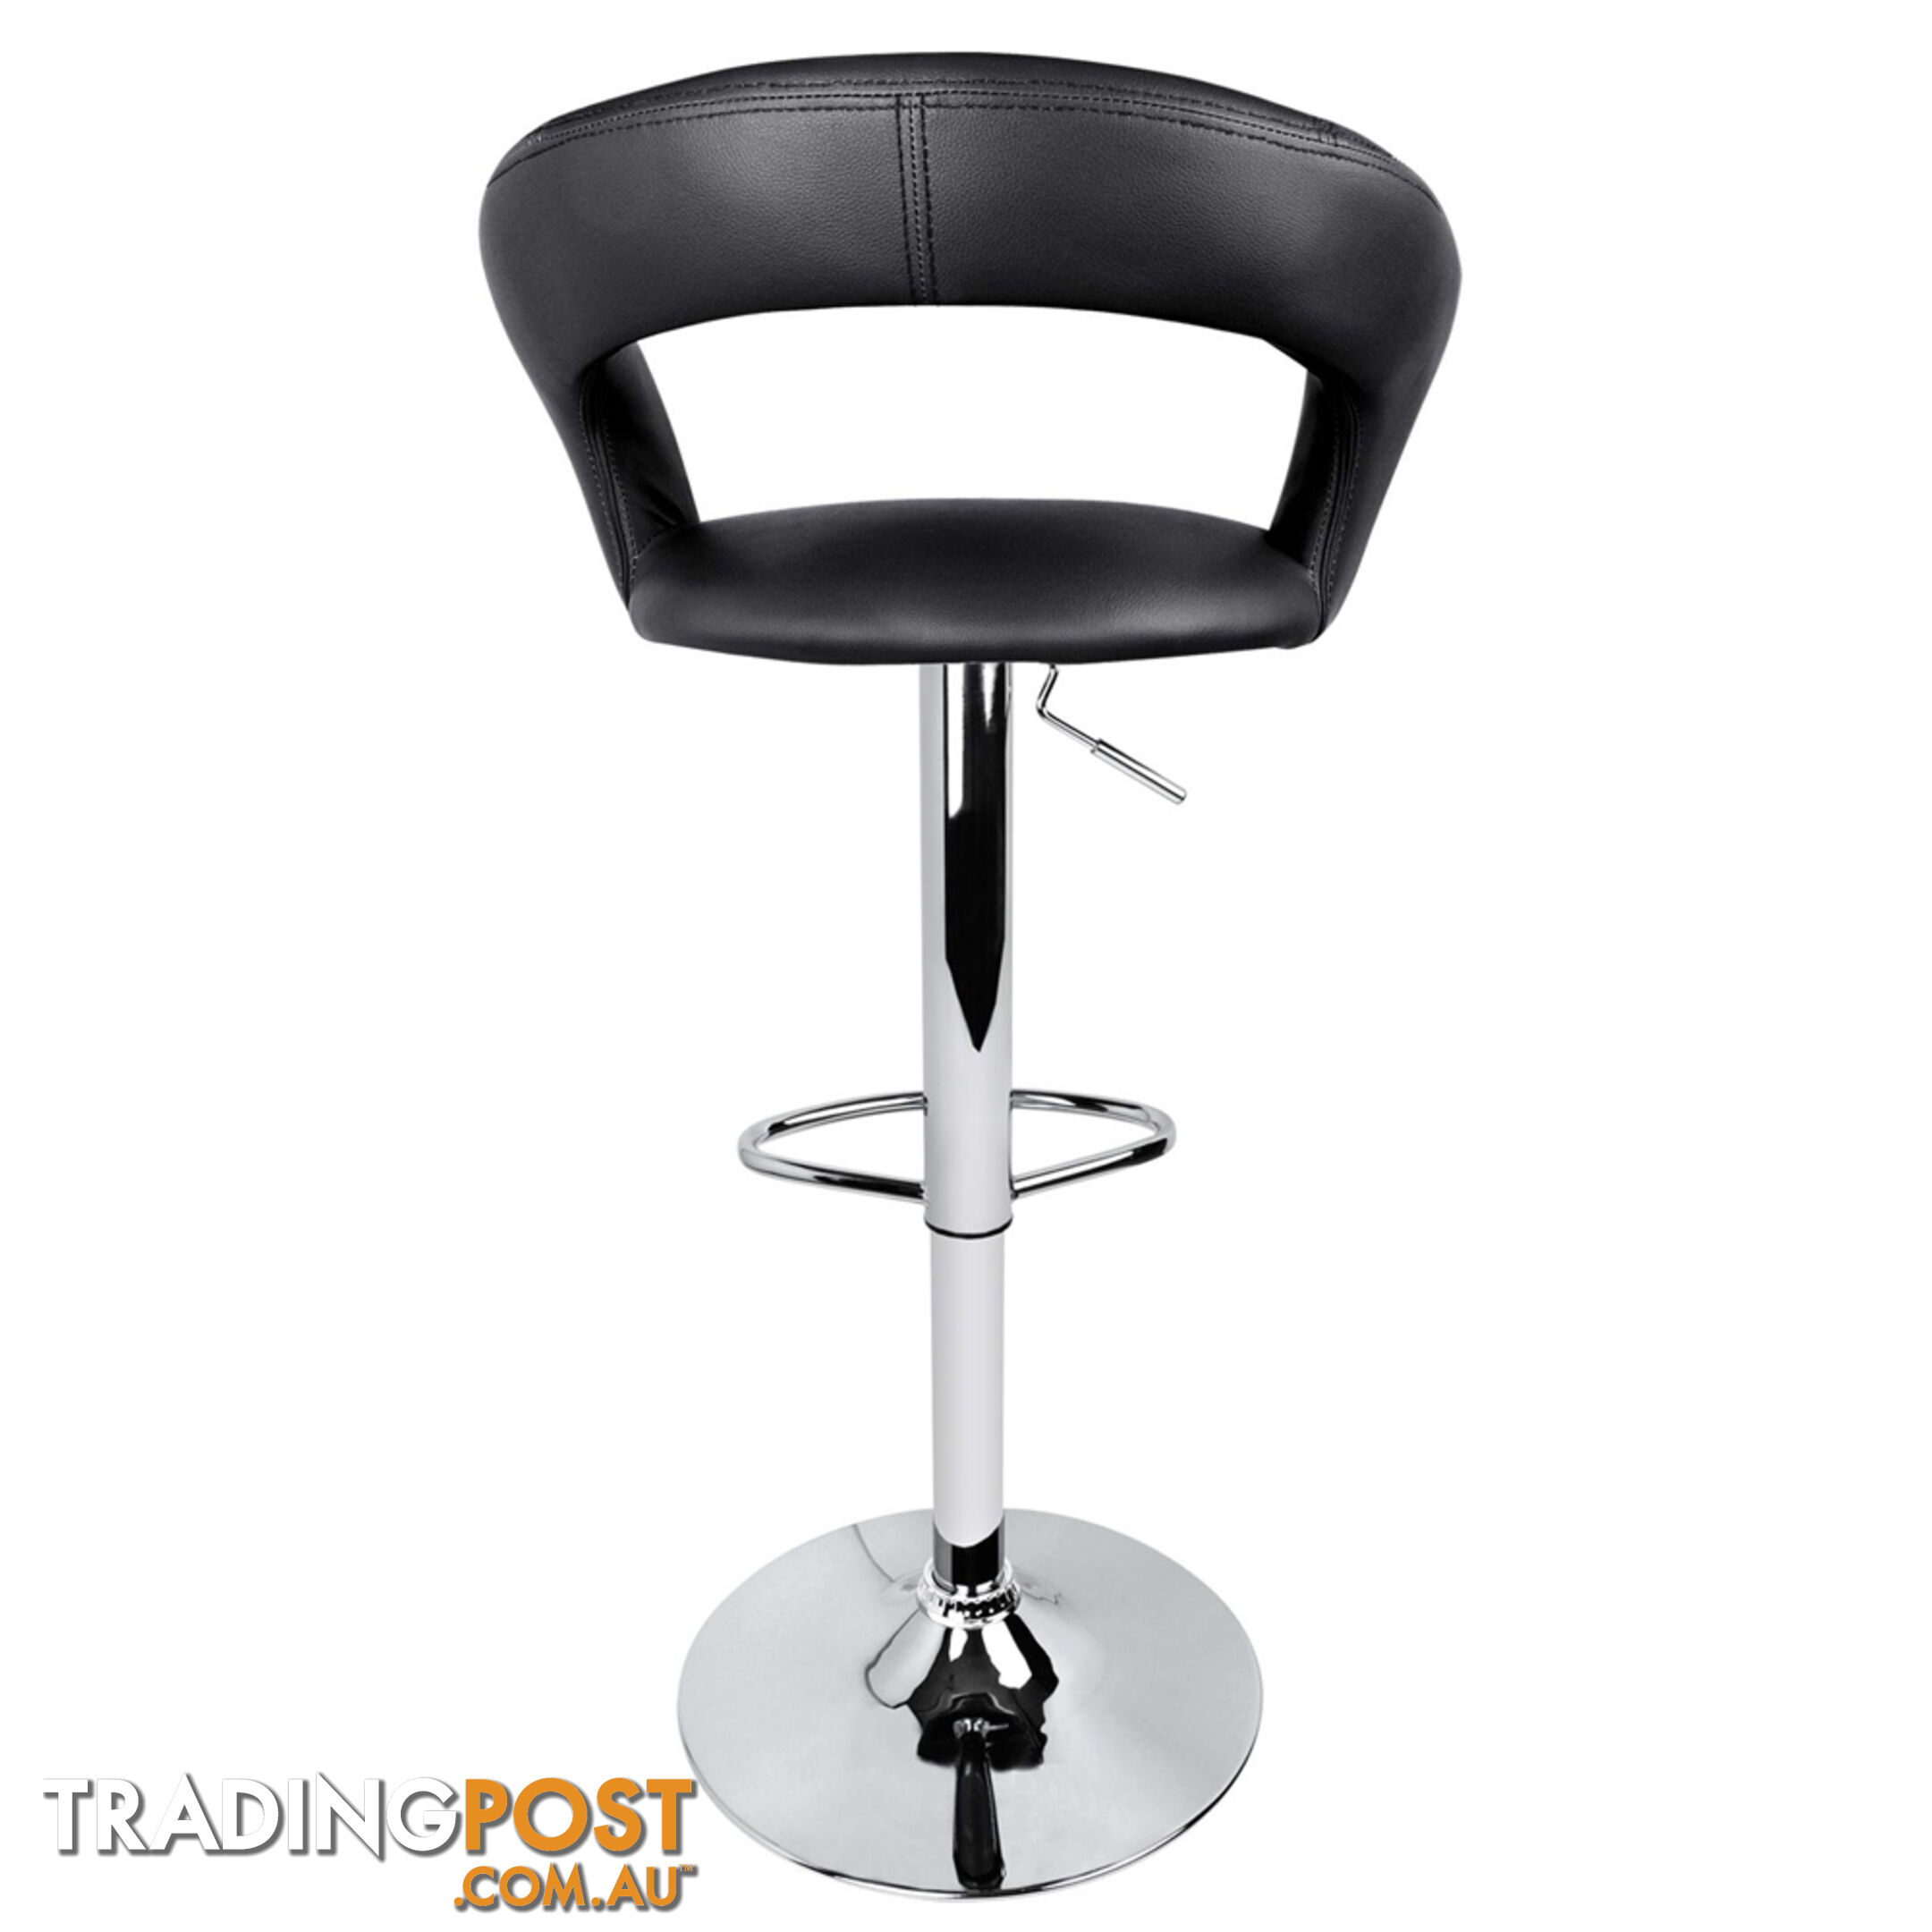 2 x PU Leather Backrest Kitchen Bar Stool Cafe Pub Office Barstools Chair Black